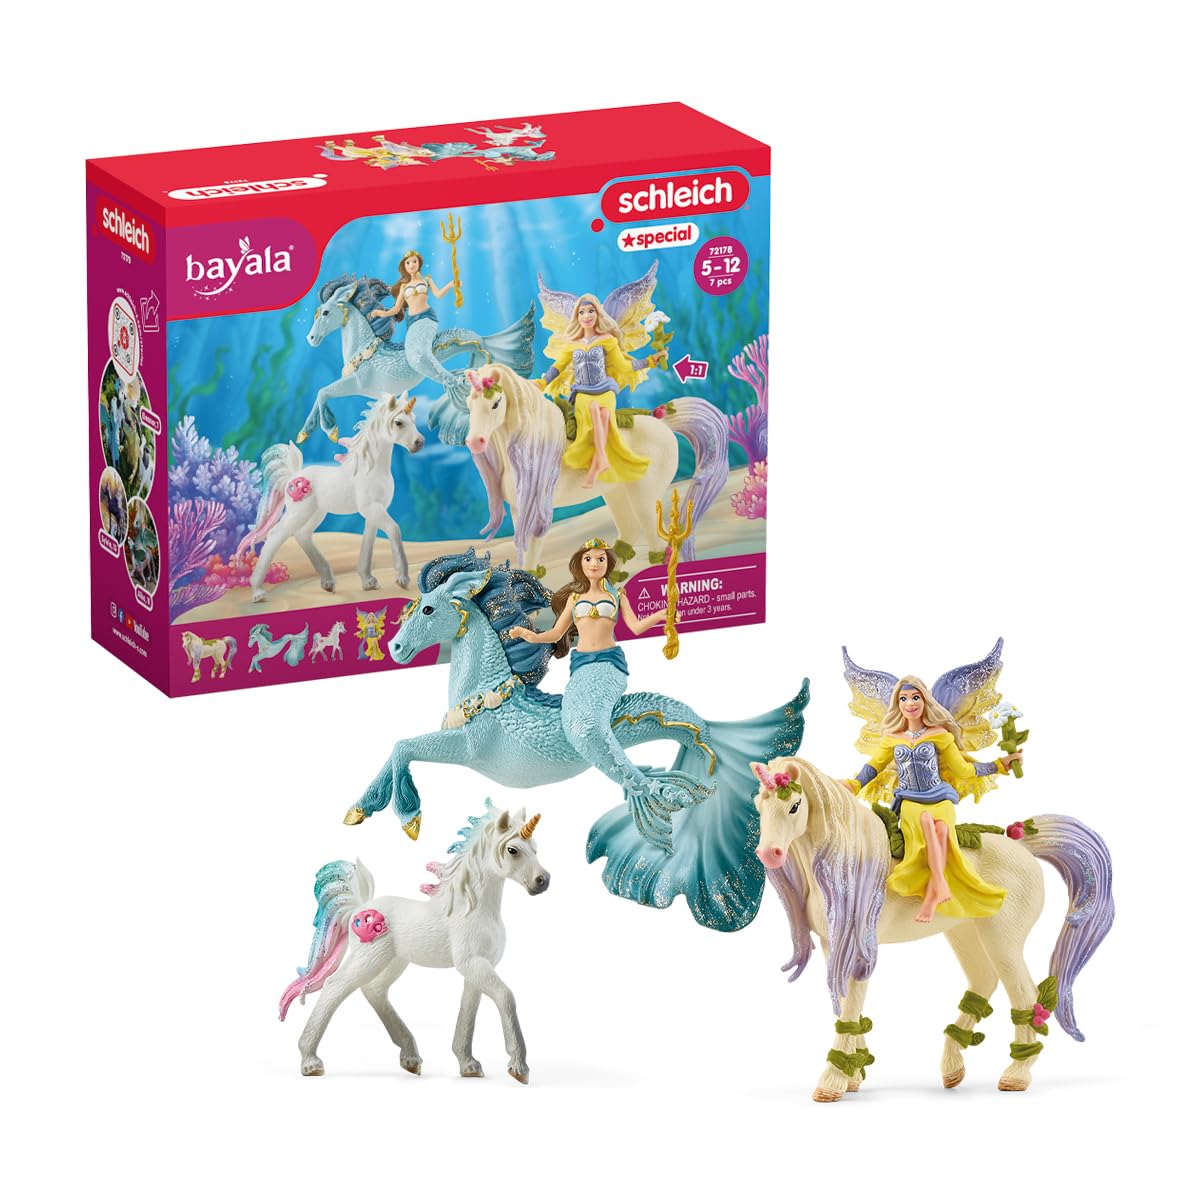 Schleich bayala, 5-Piece Starter Set with Fairy Feya, Mermaid Eyela, and Unicorn Toy Figurines, Ages 5+